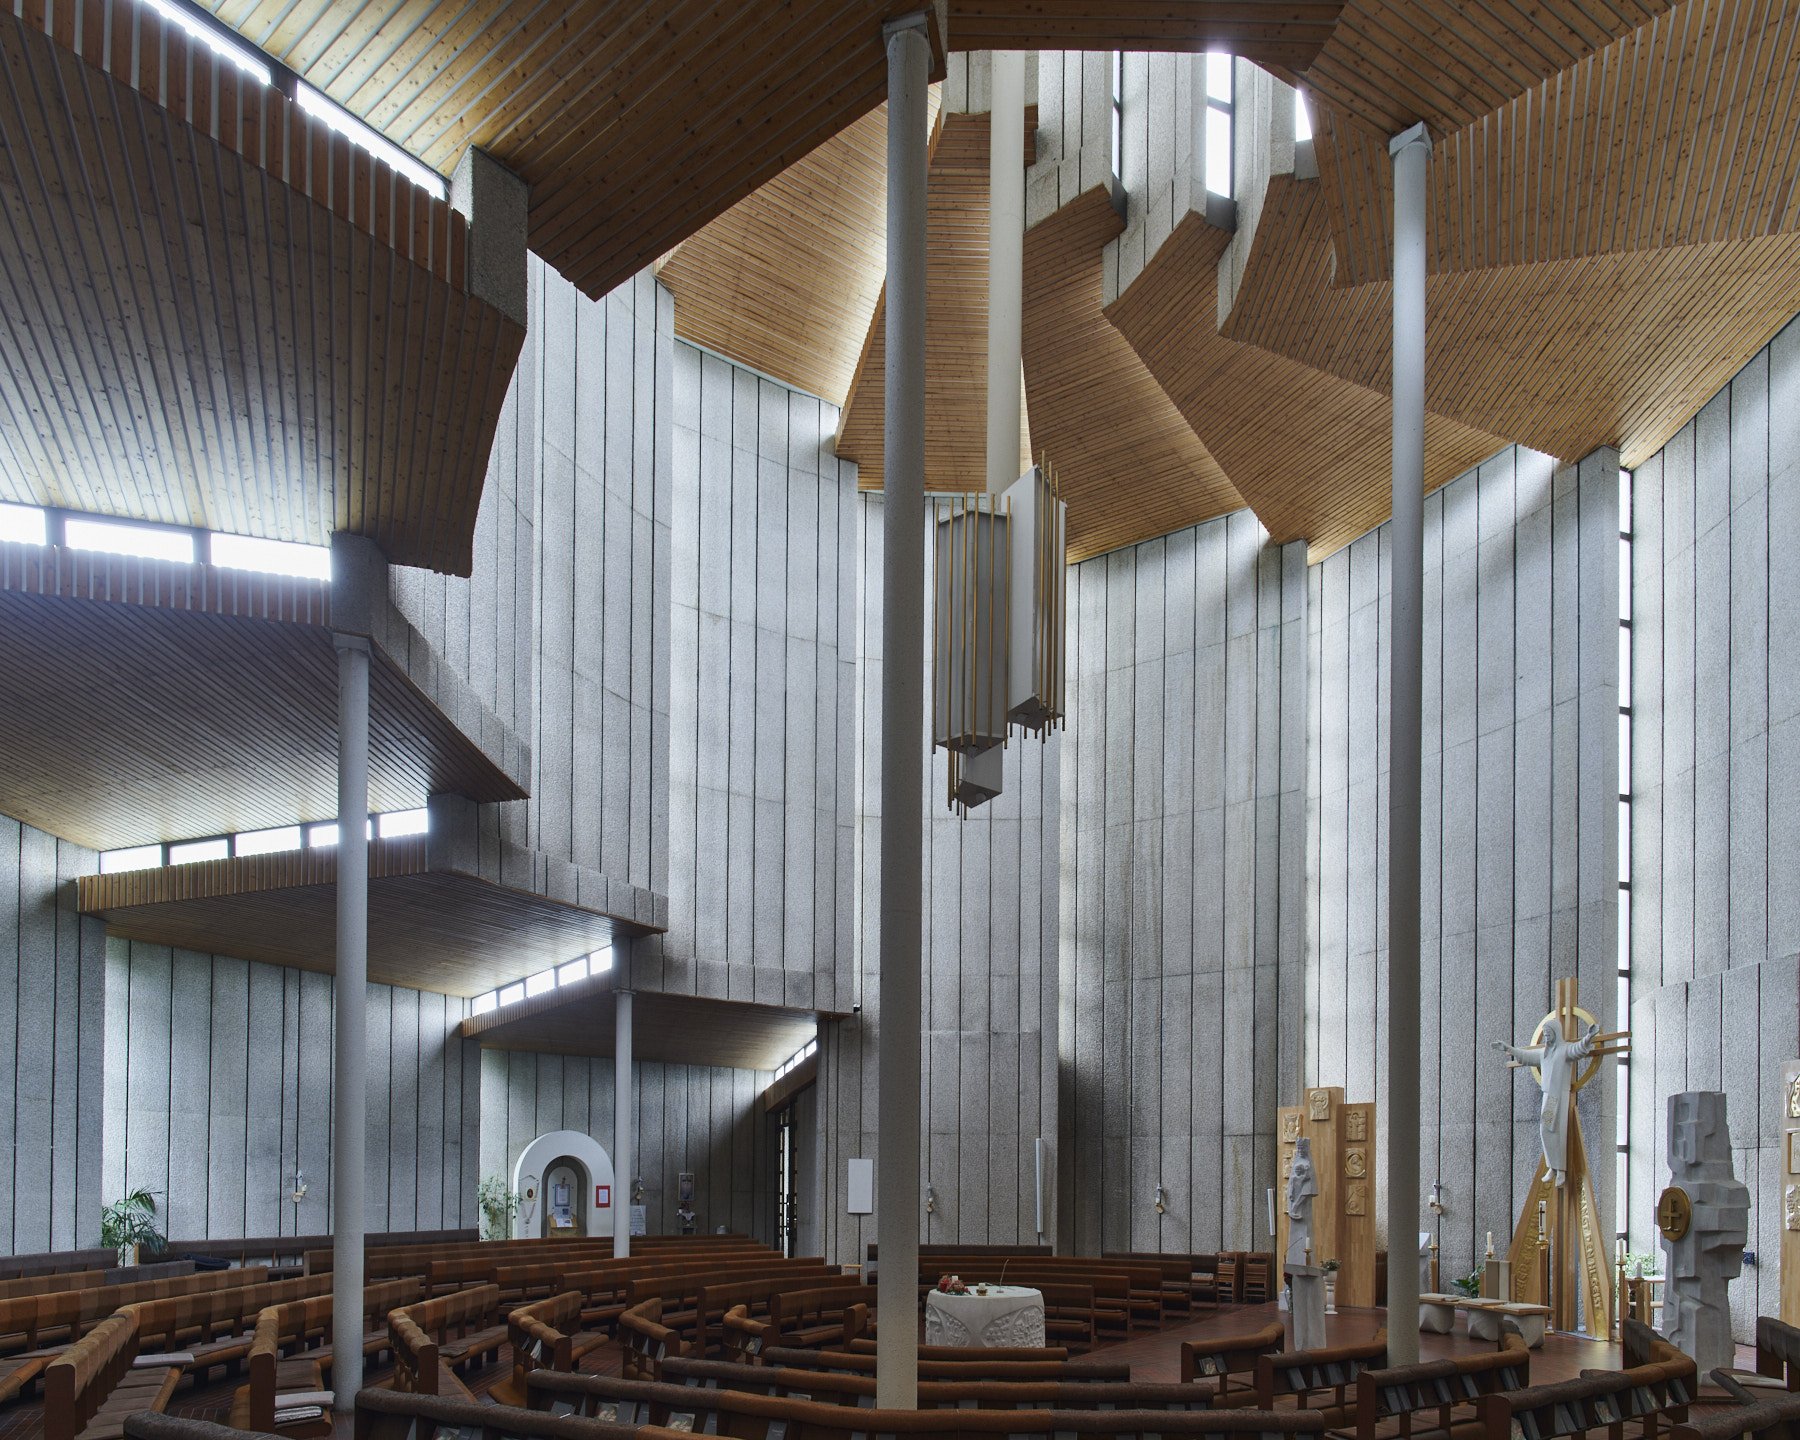 Heilig Geist Kirche - Stegersbach, Austria - Anton Presoly / Egon Presoly / Eva Presoly, 1971-1974